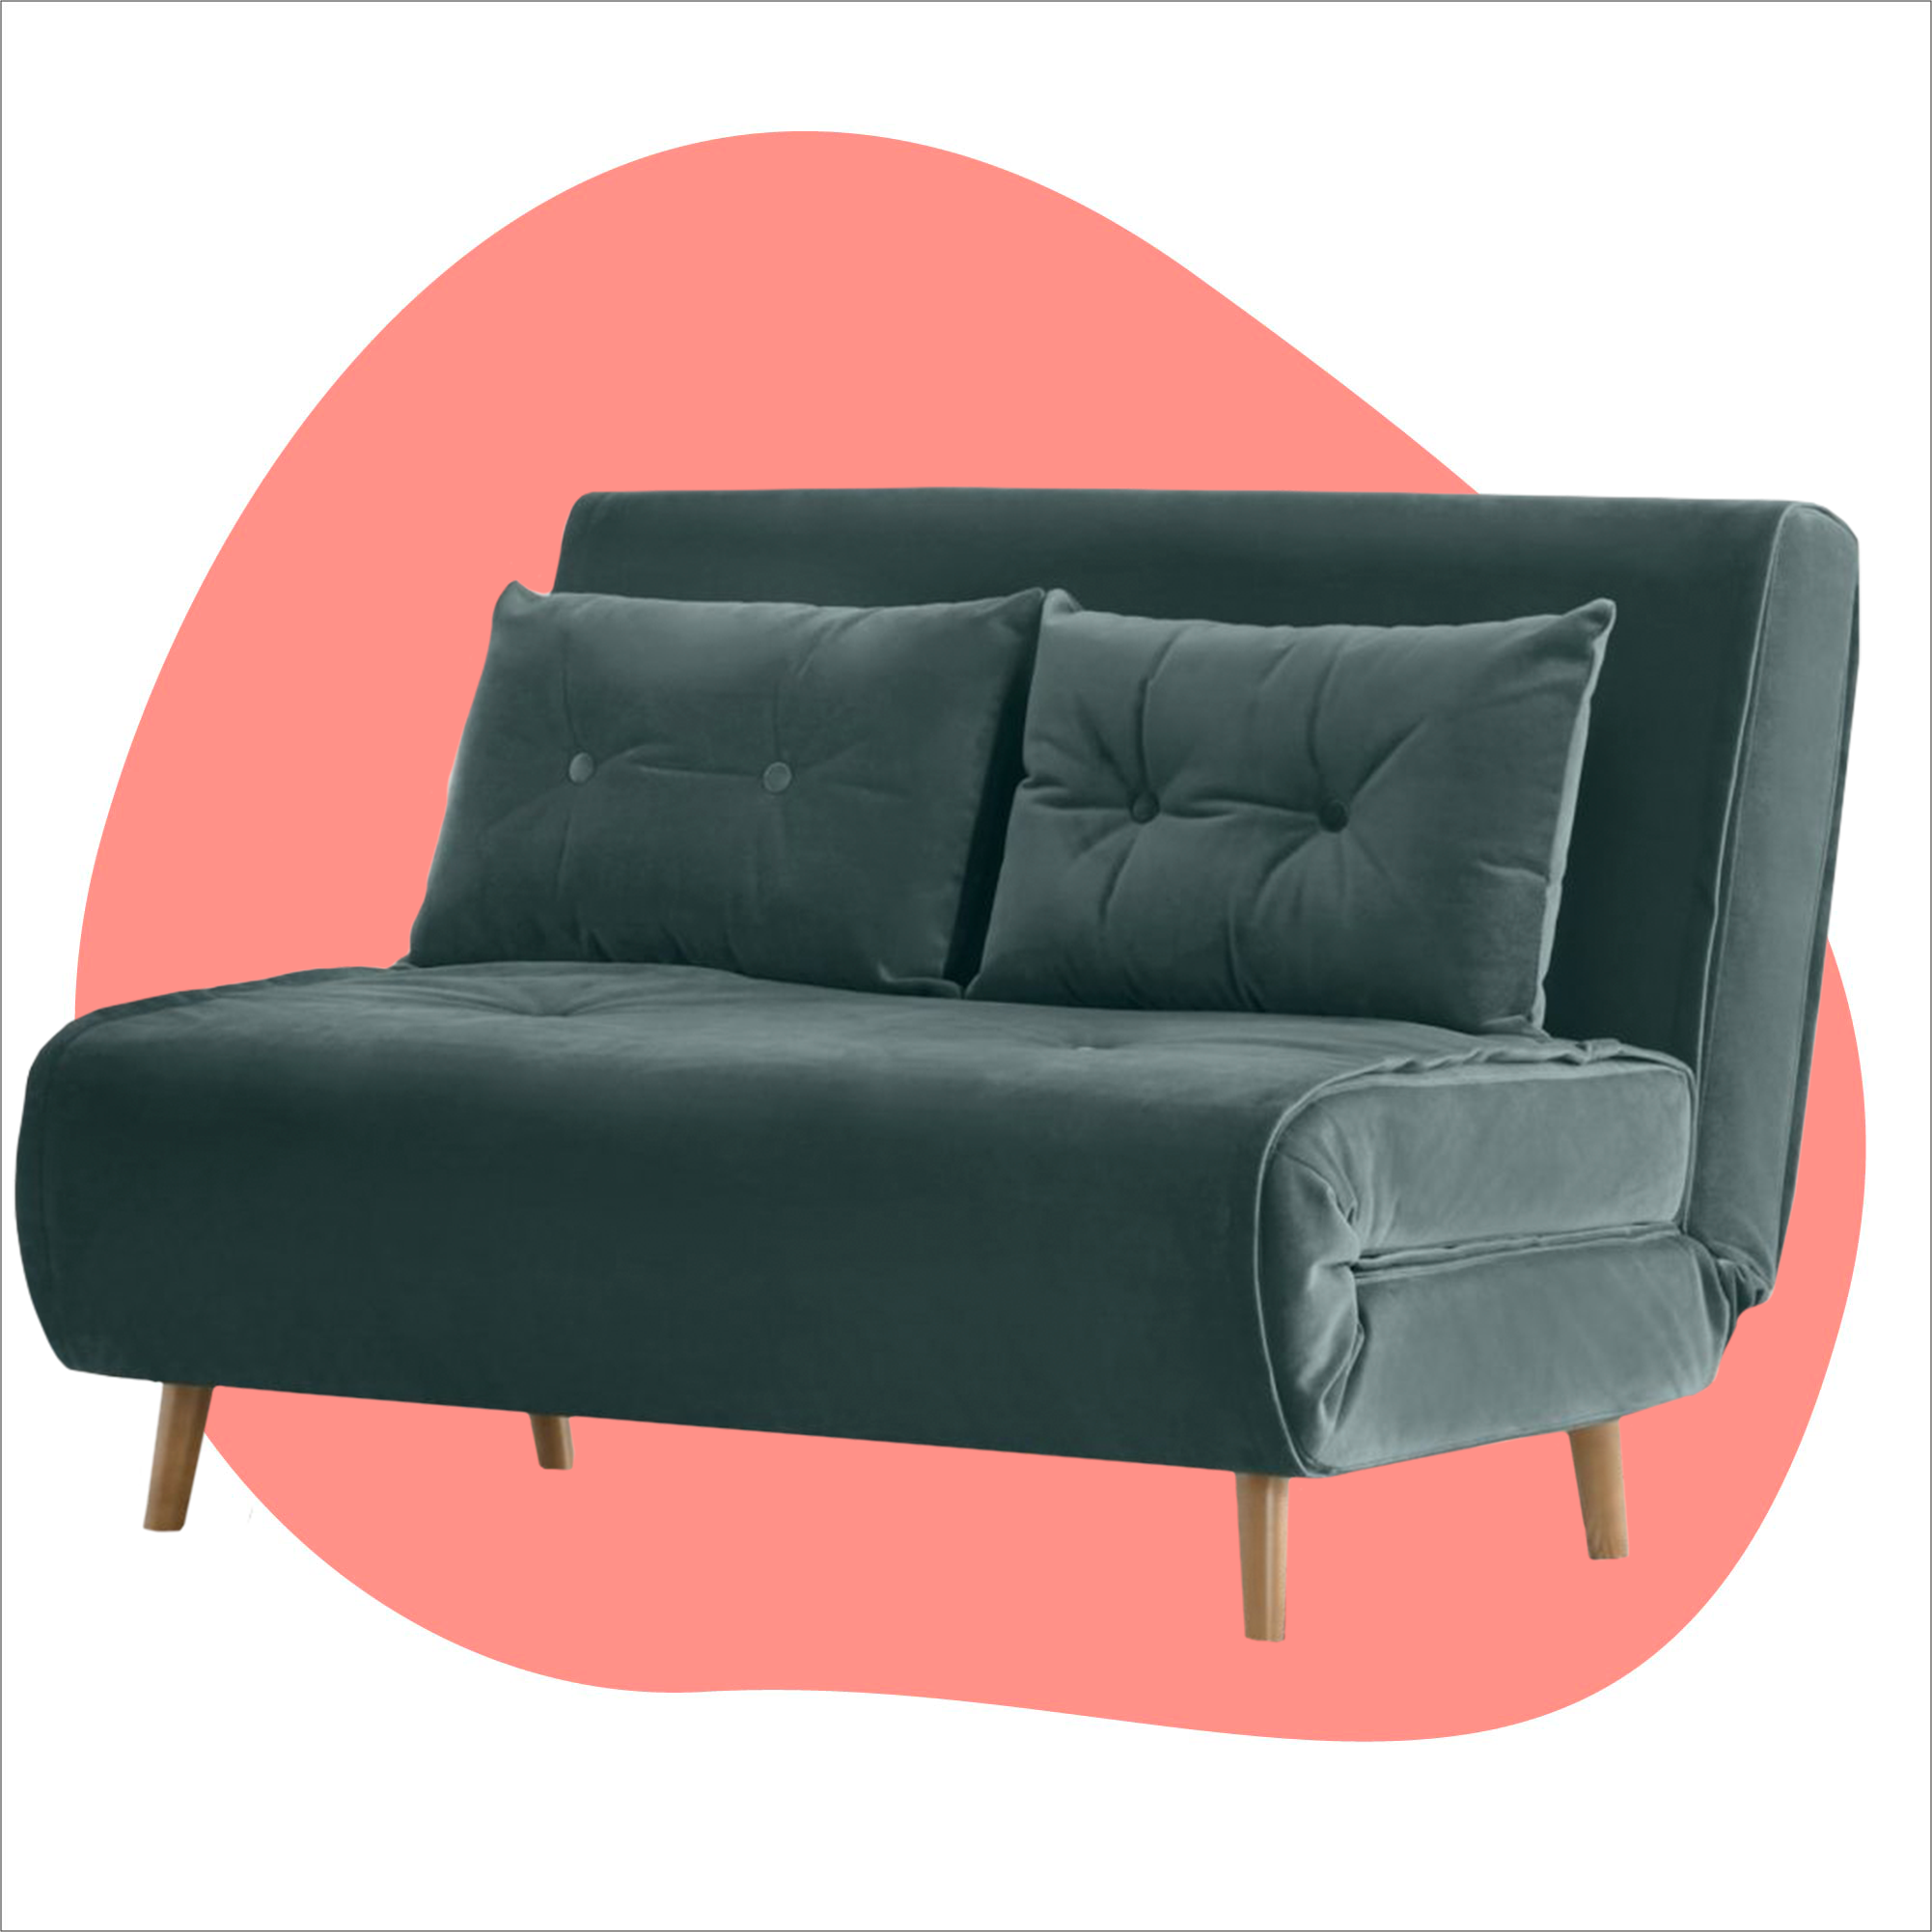 Best sofa beds comfortable, versatile | Ideal Home